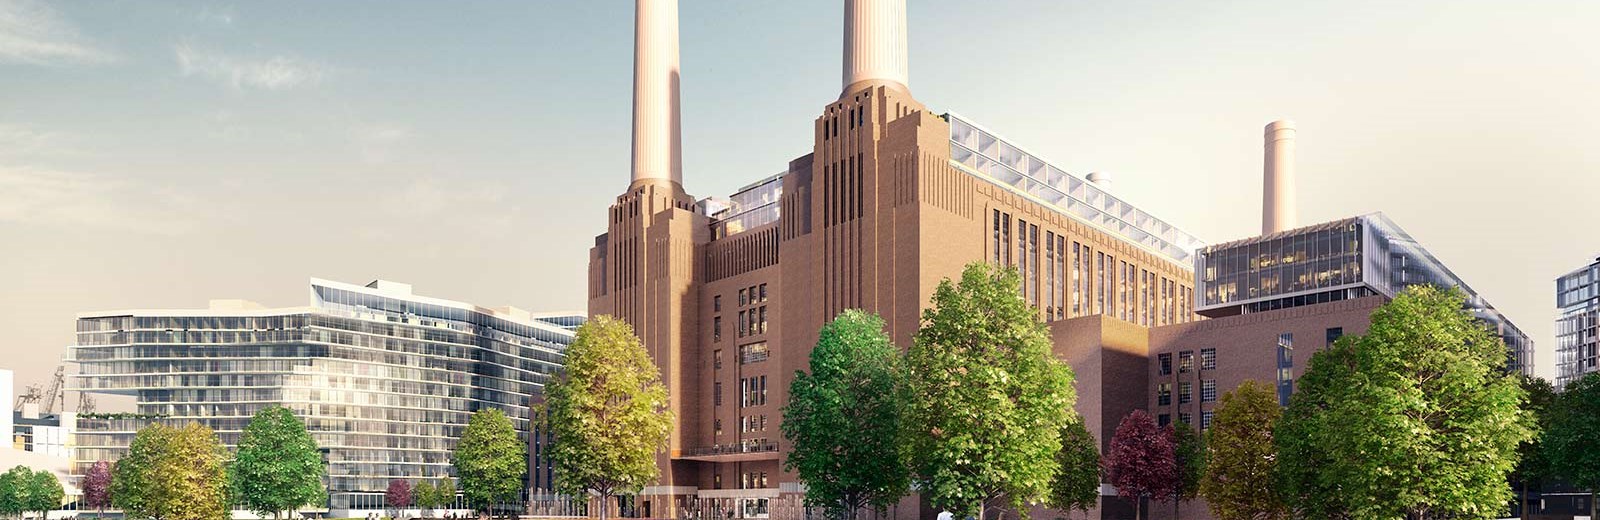 London Battersea Power Station Riverside View - Mace Group